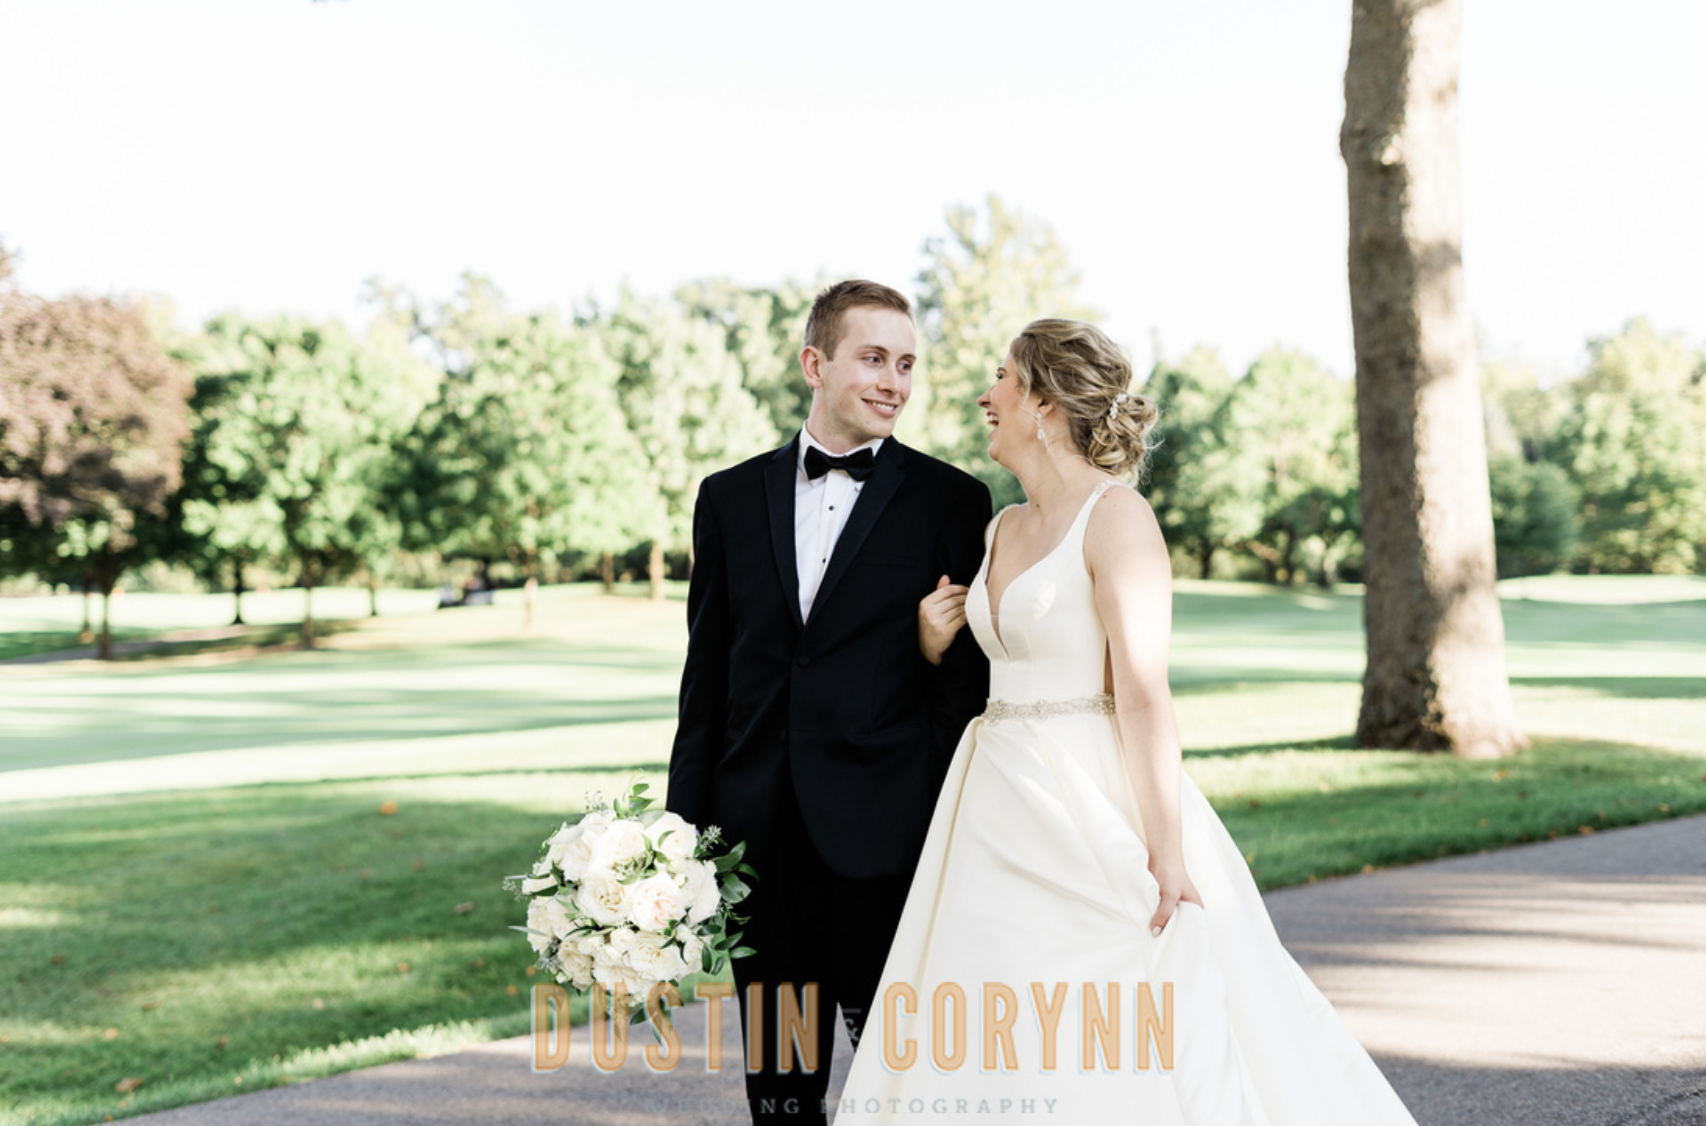 Fort Wayne wedding photographer captures bride and groom walking through golf course